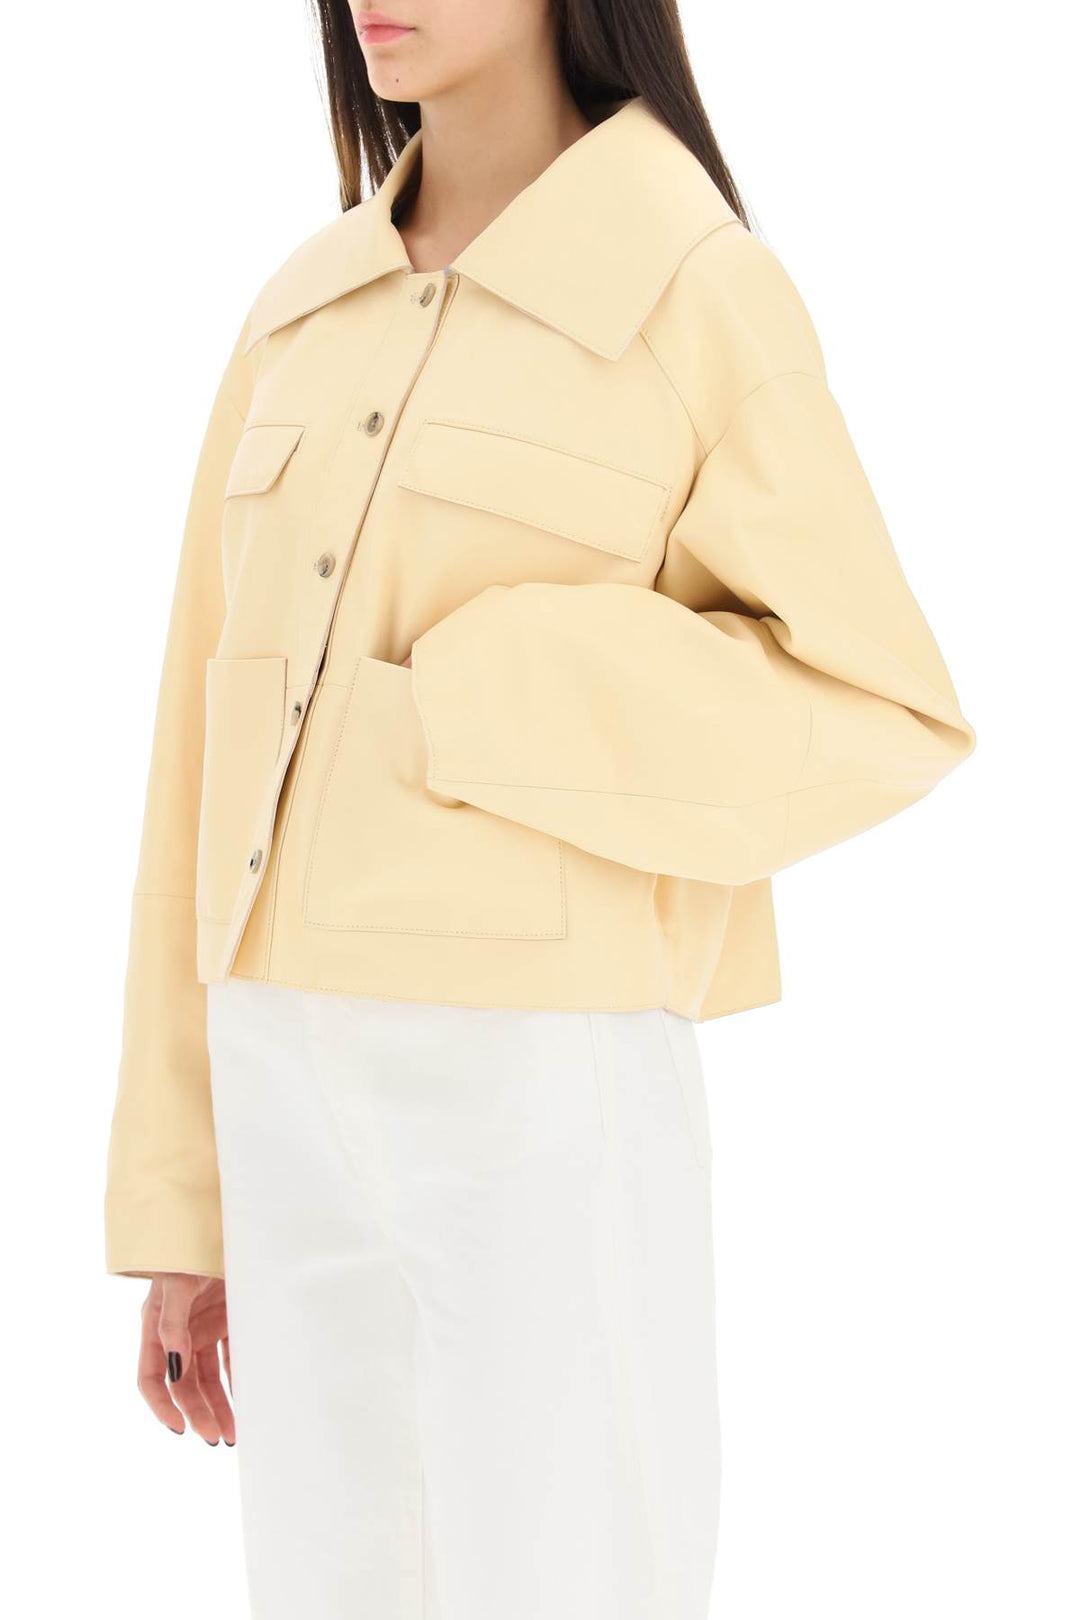 Loulou Studio 'Sulat' Leather Jacket   Yellow